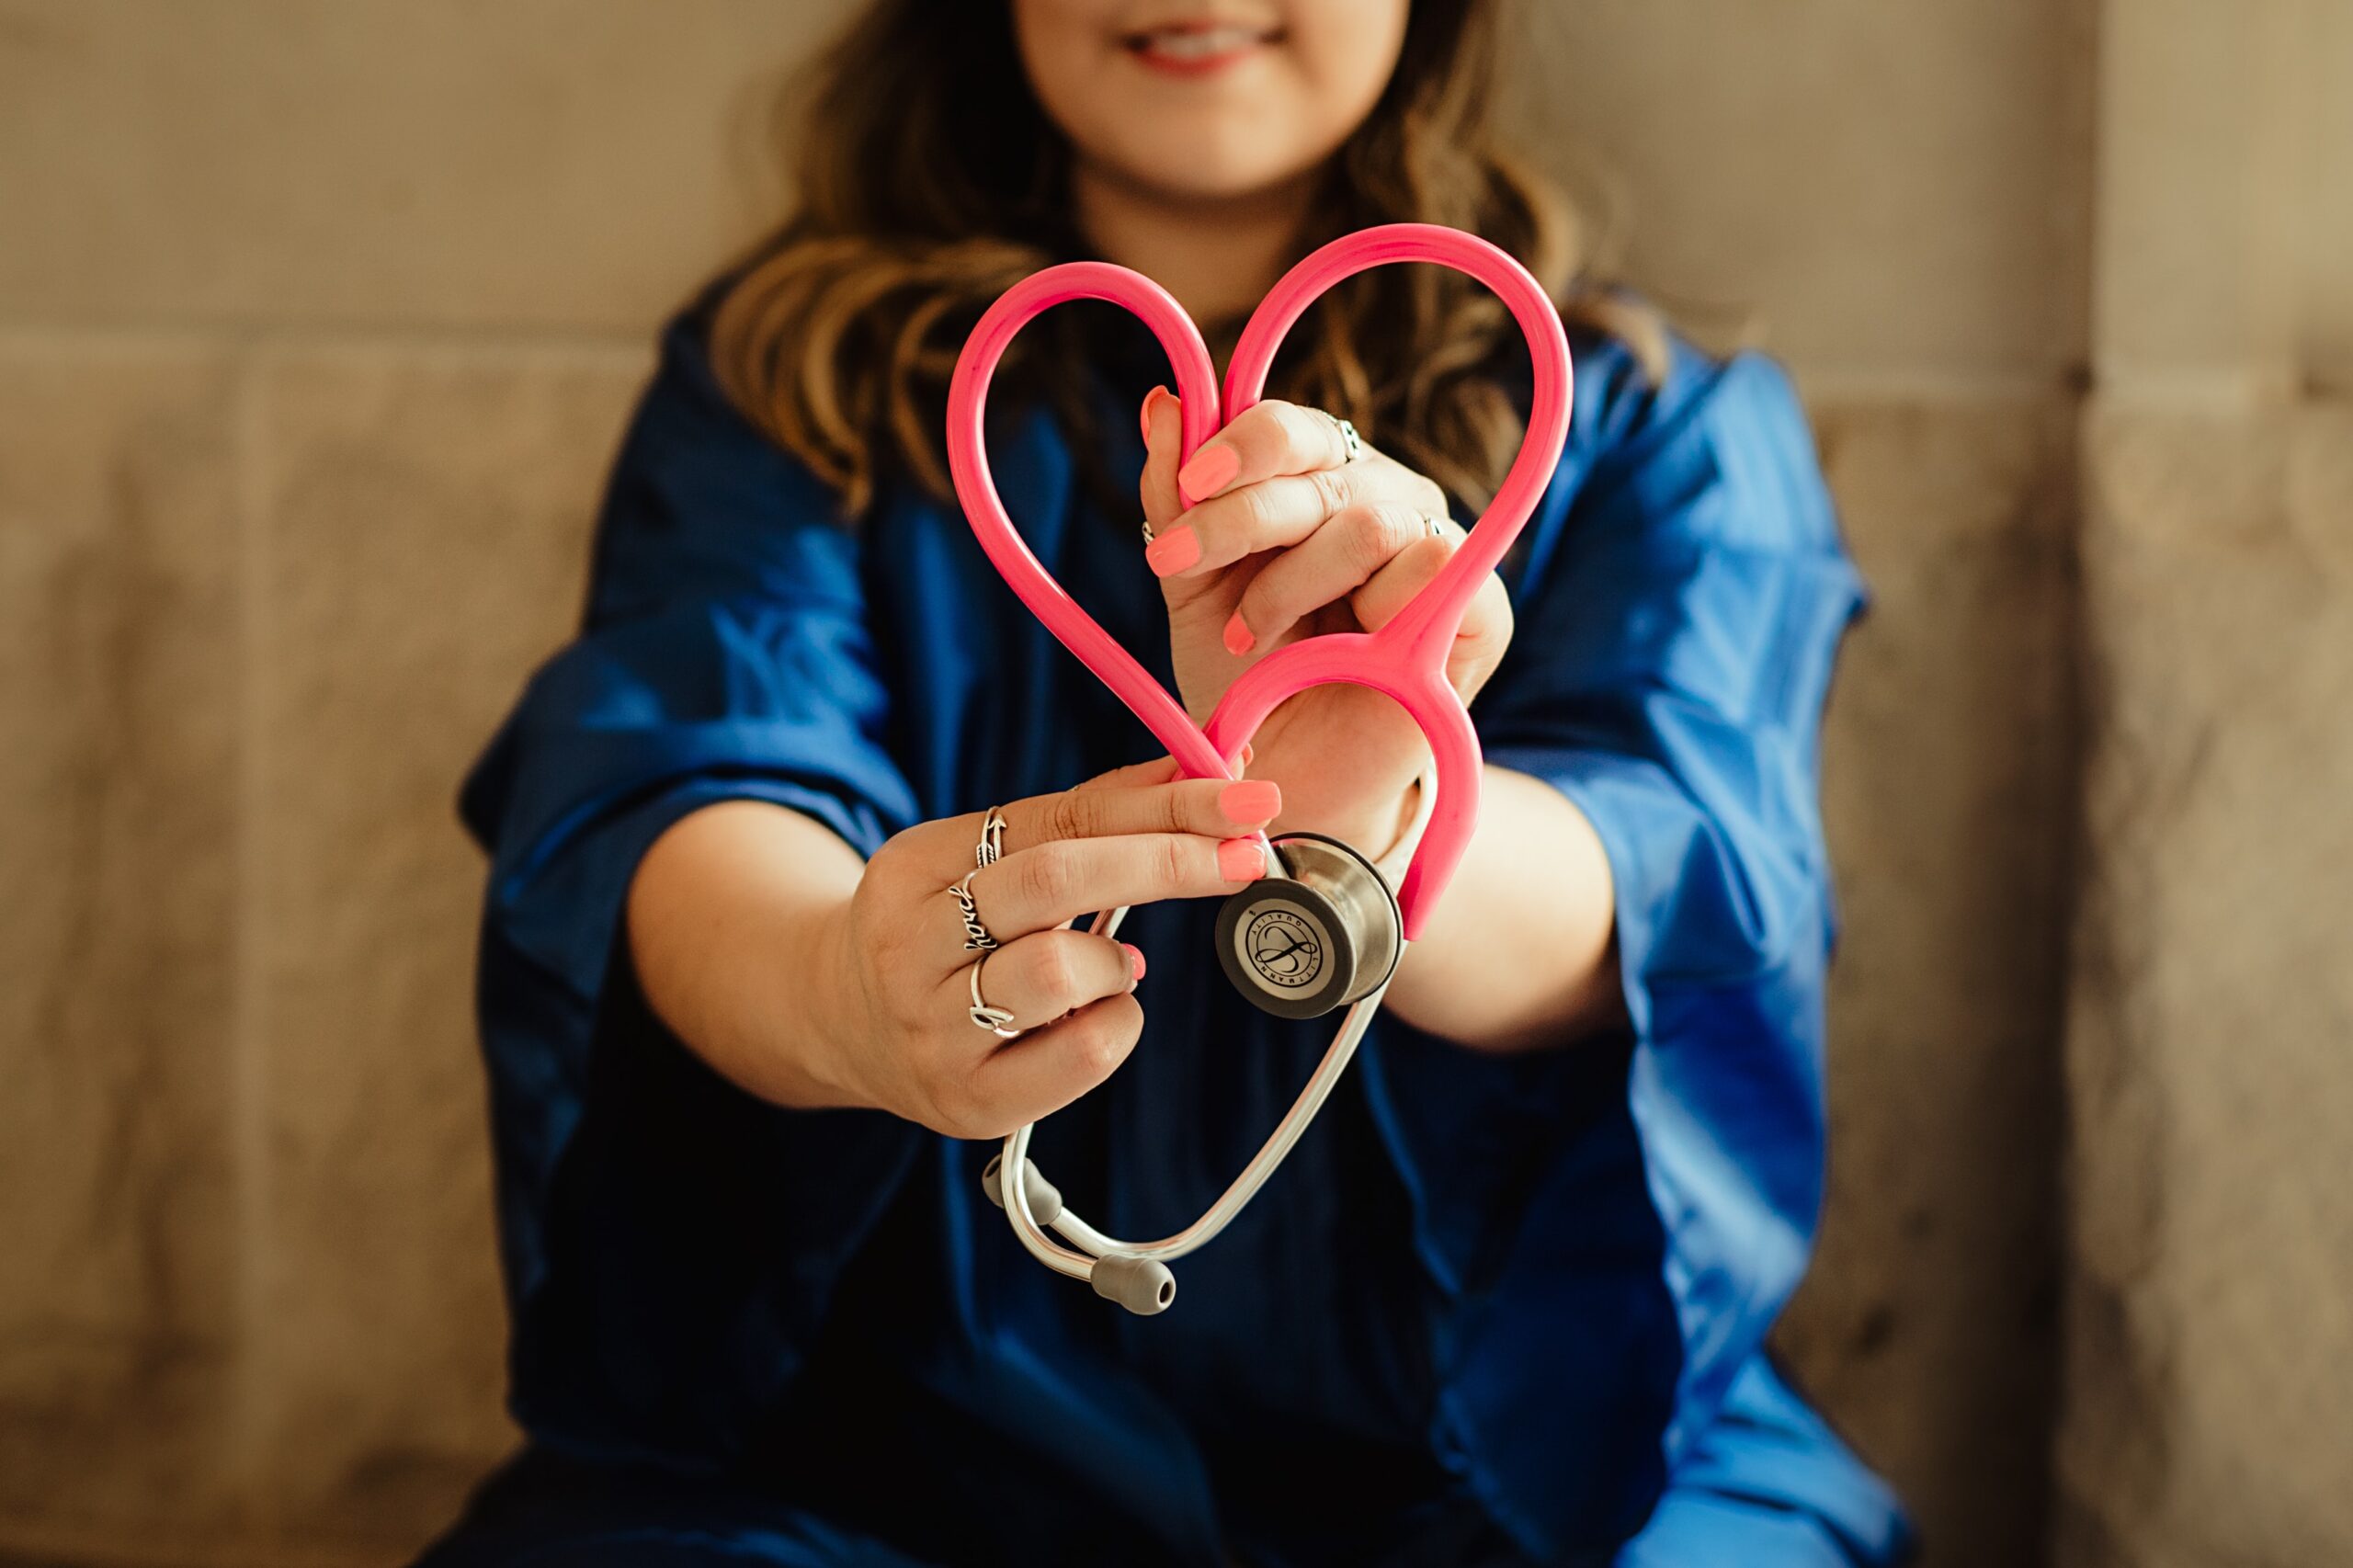 Image shows nurse making heart shape with stethoscope